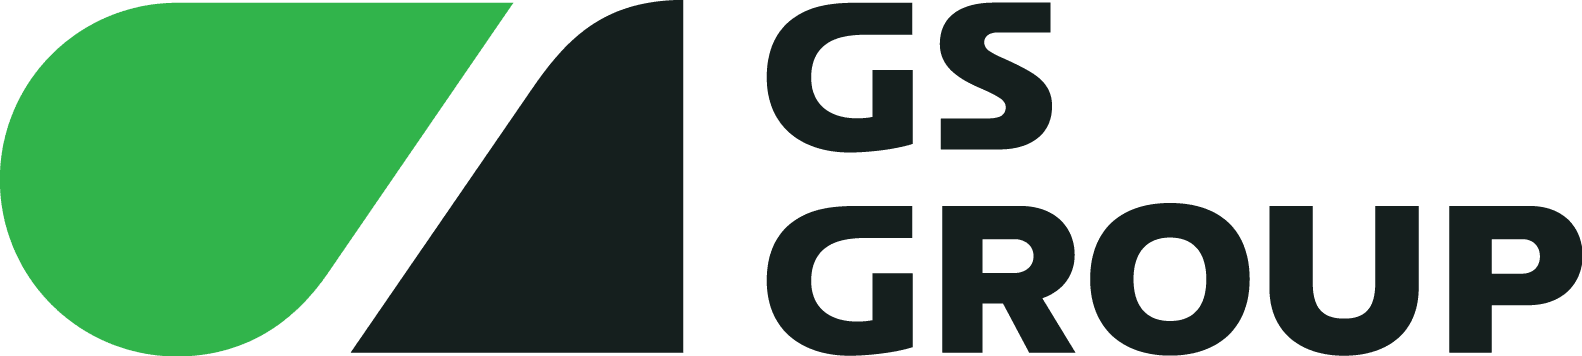 GS Group Colors